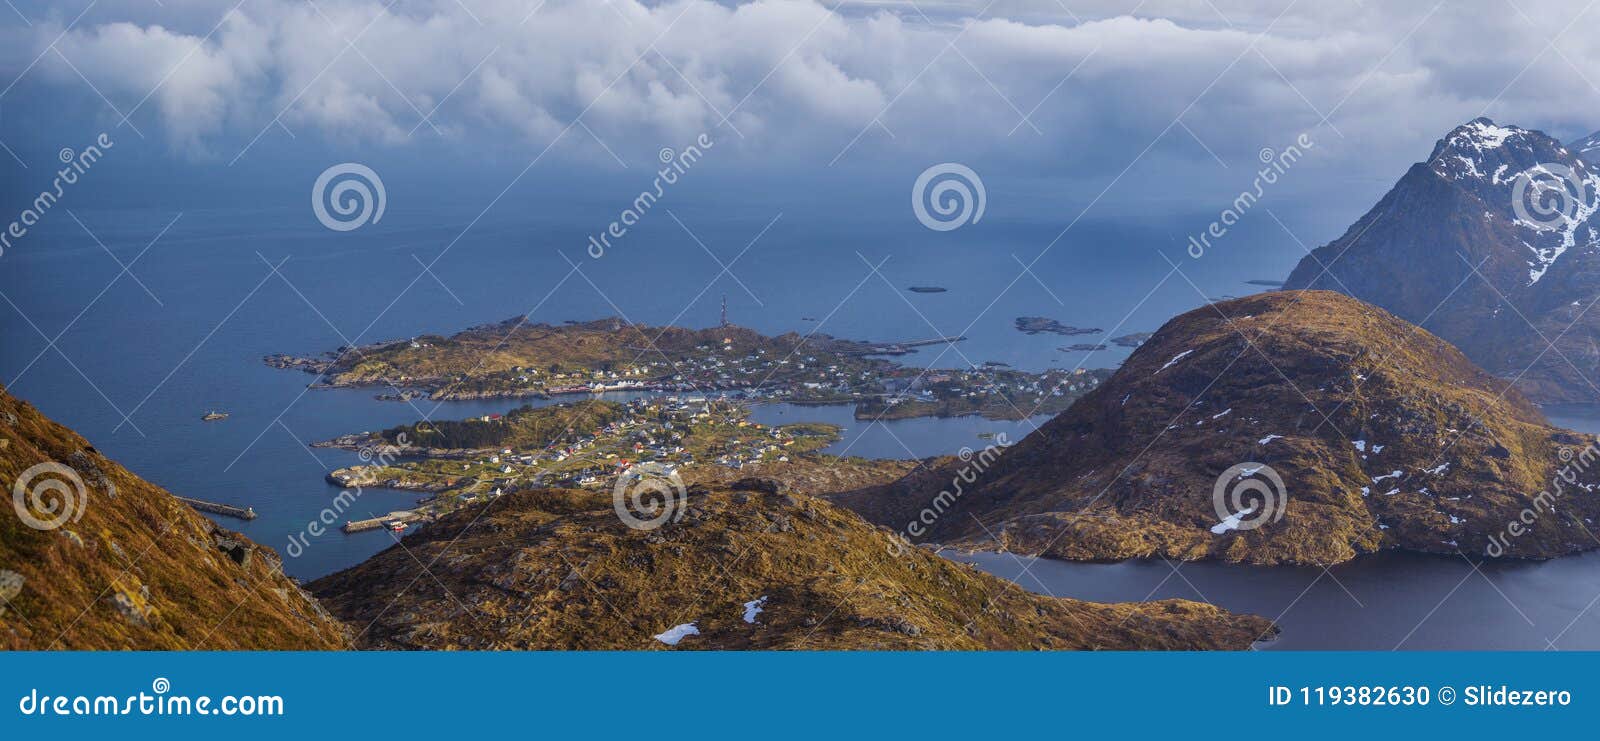 moskenes village, lofoten islands, norway